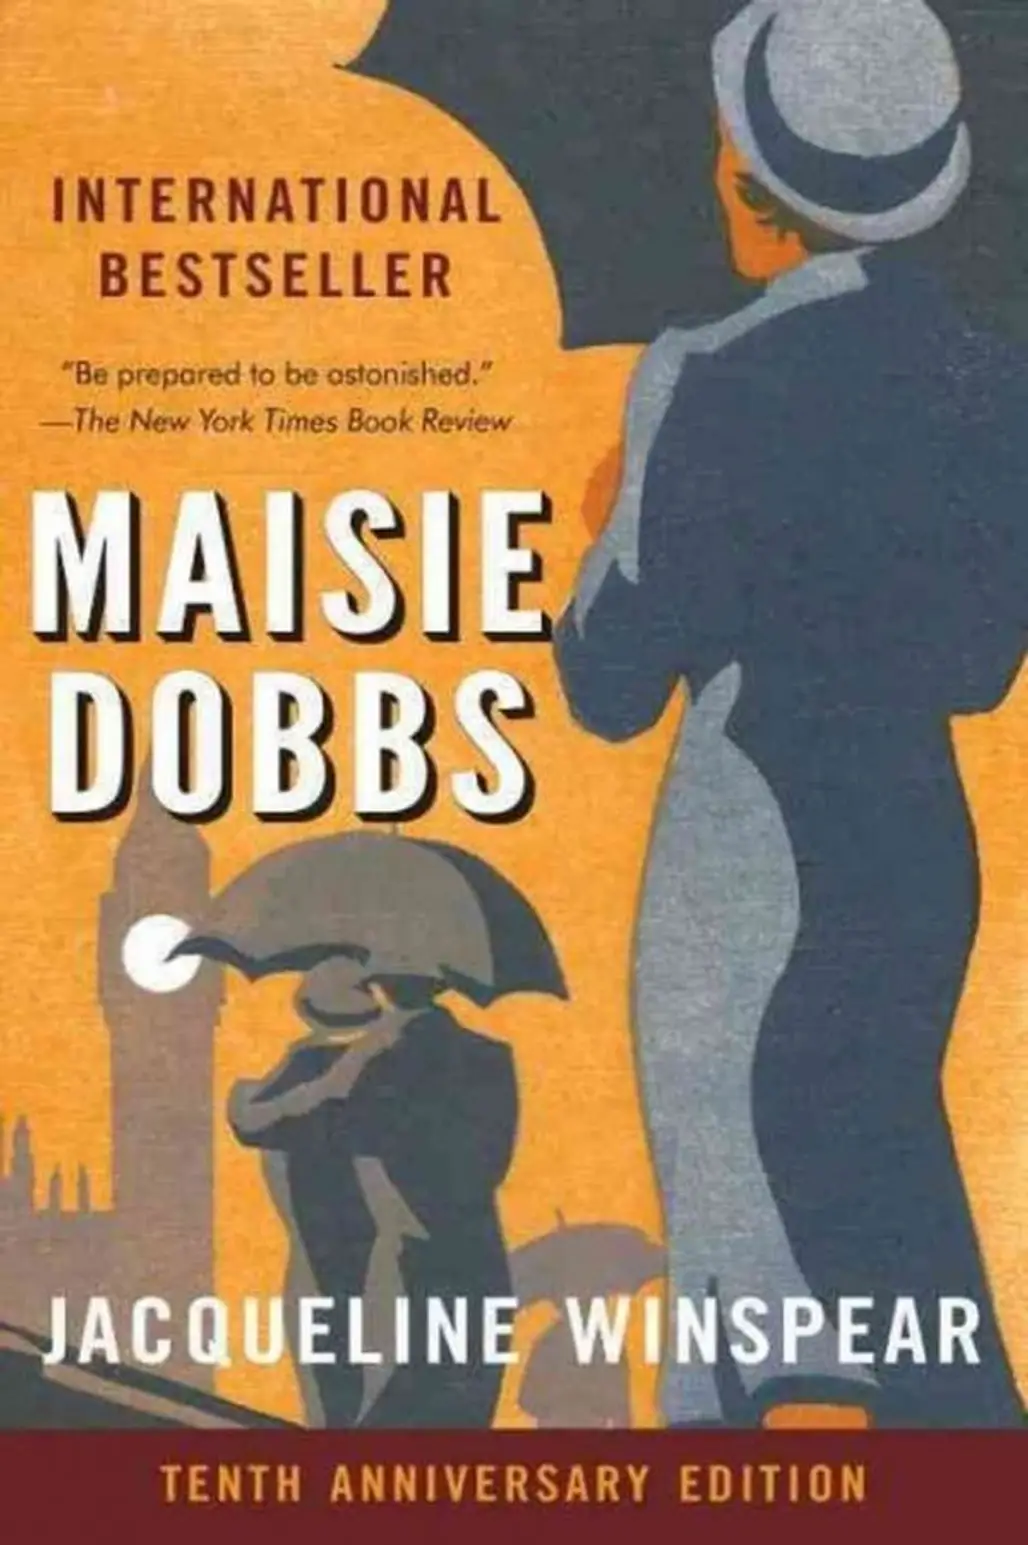 Maisie Dobbs by Jacqueline Winspear (2003)